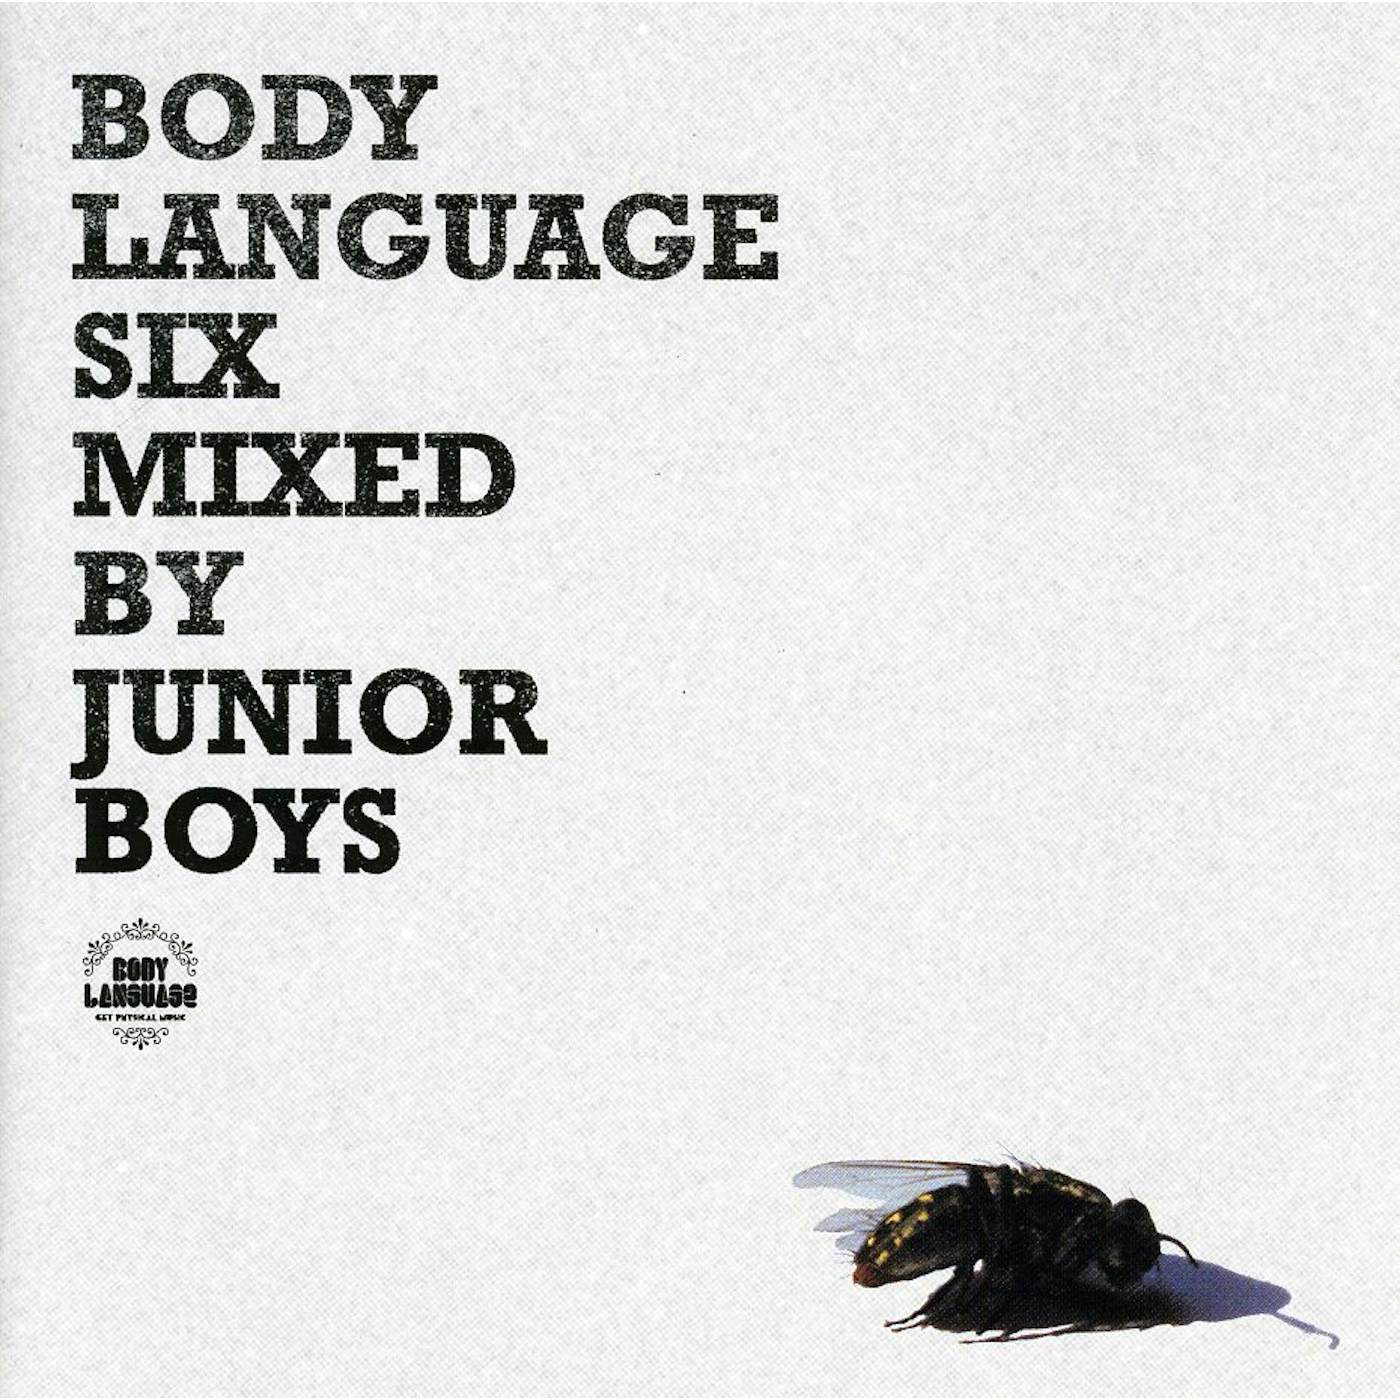 Junior Boys BODY LANGUAGE 6 CD